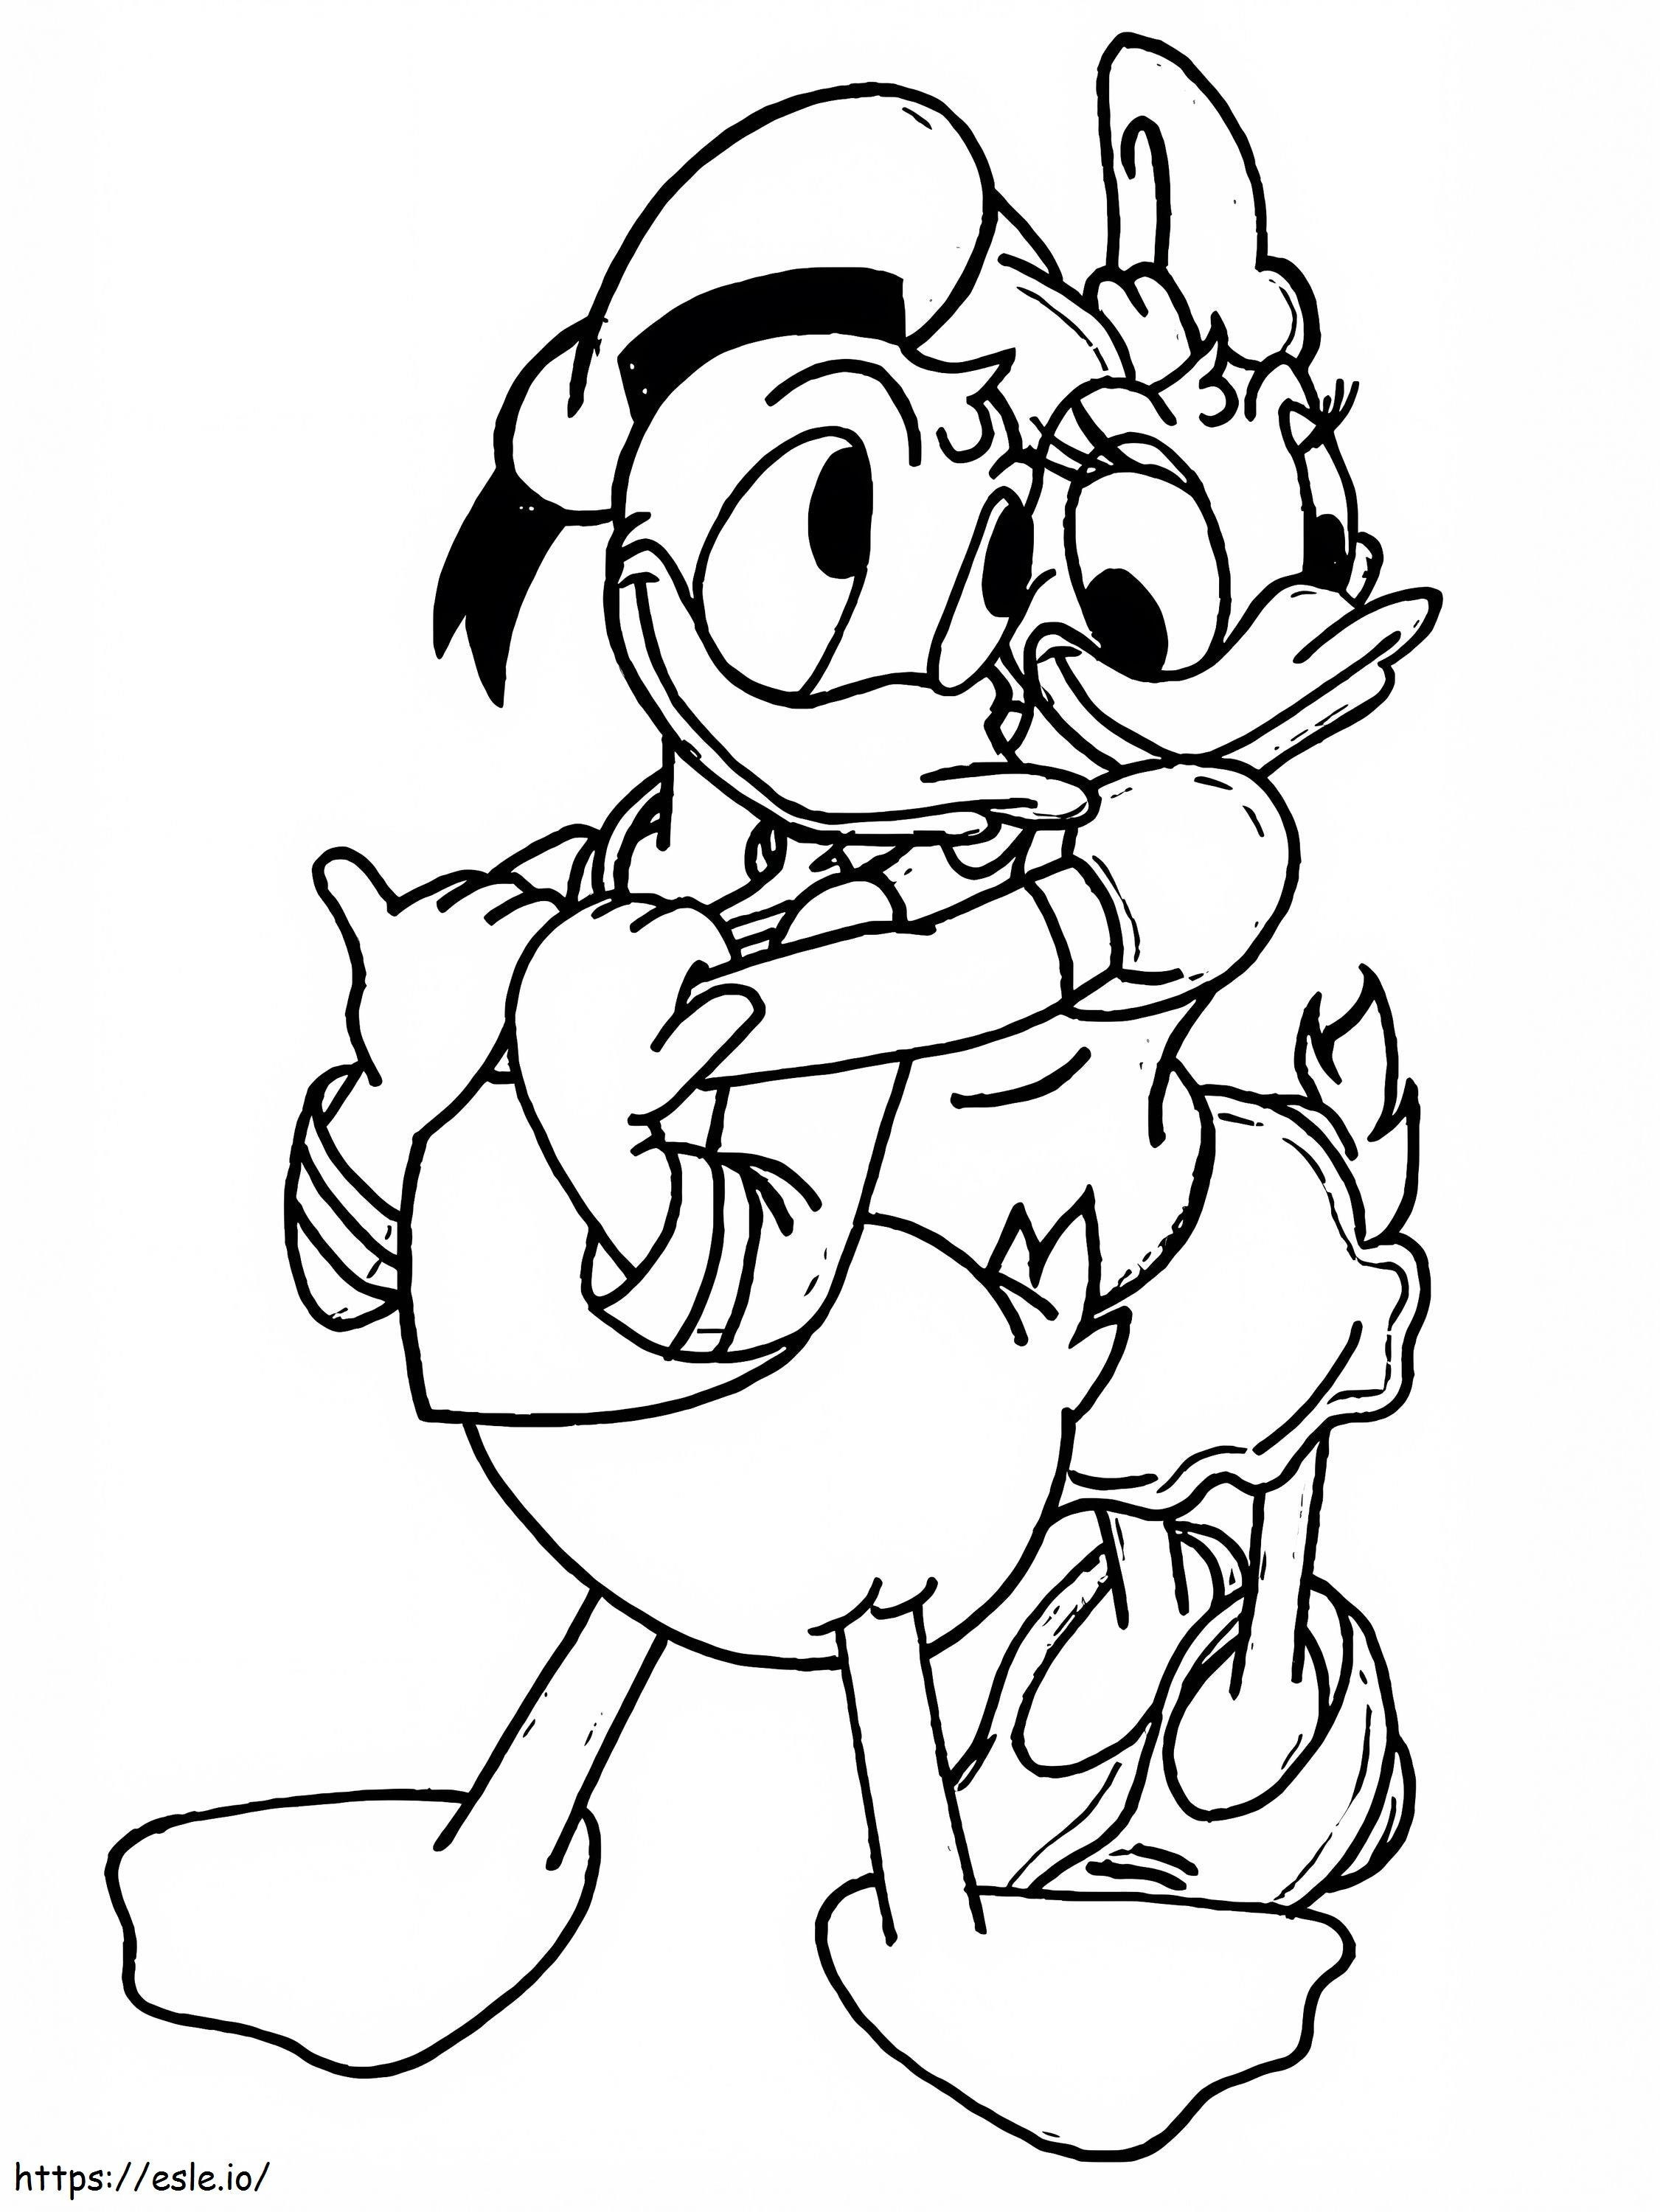 Donald mit Daisy ausmalbilder